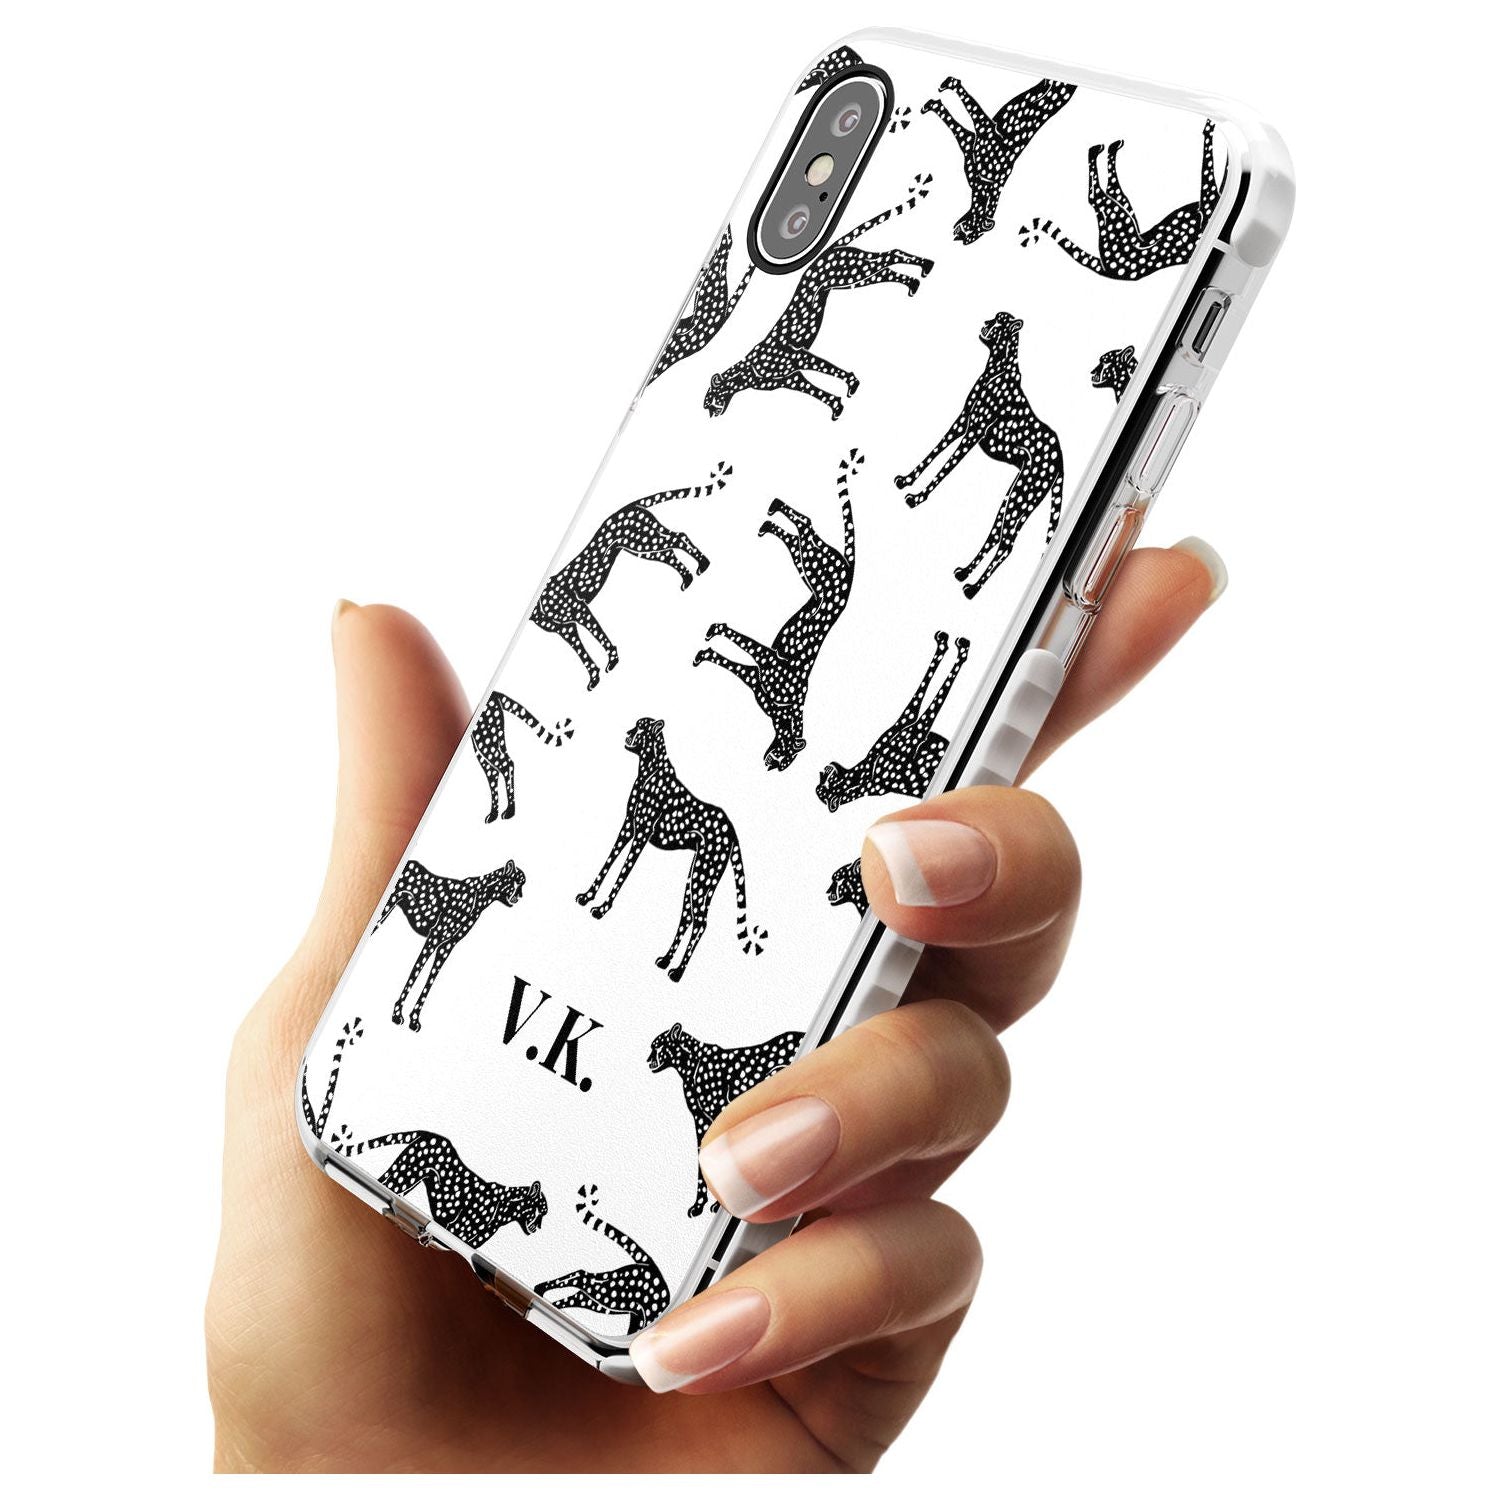 Personalised Cheetah Pattern: Black & White Slim TPU Phone Case Warehouse X XS Max XR